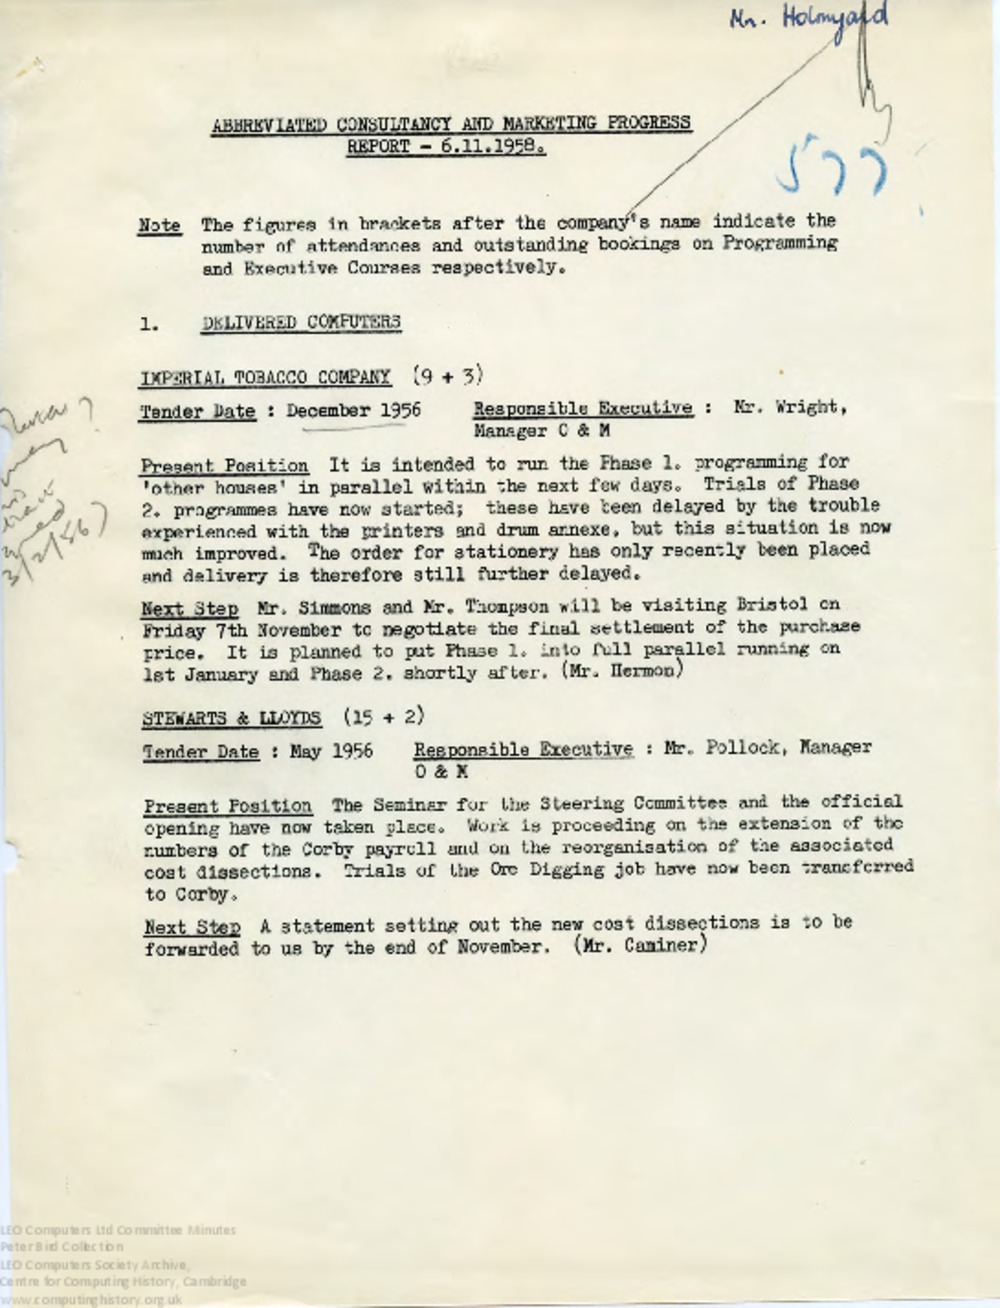 Article: 64464 Abbreviated Consultancy and Marketing Progress Report, 6th Nov 1958